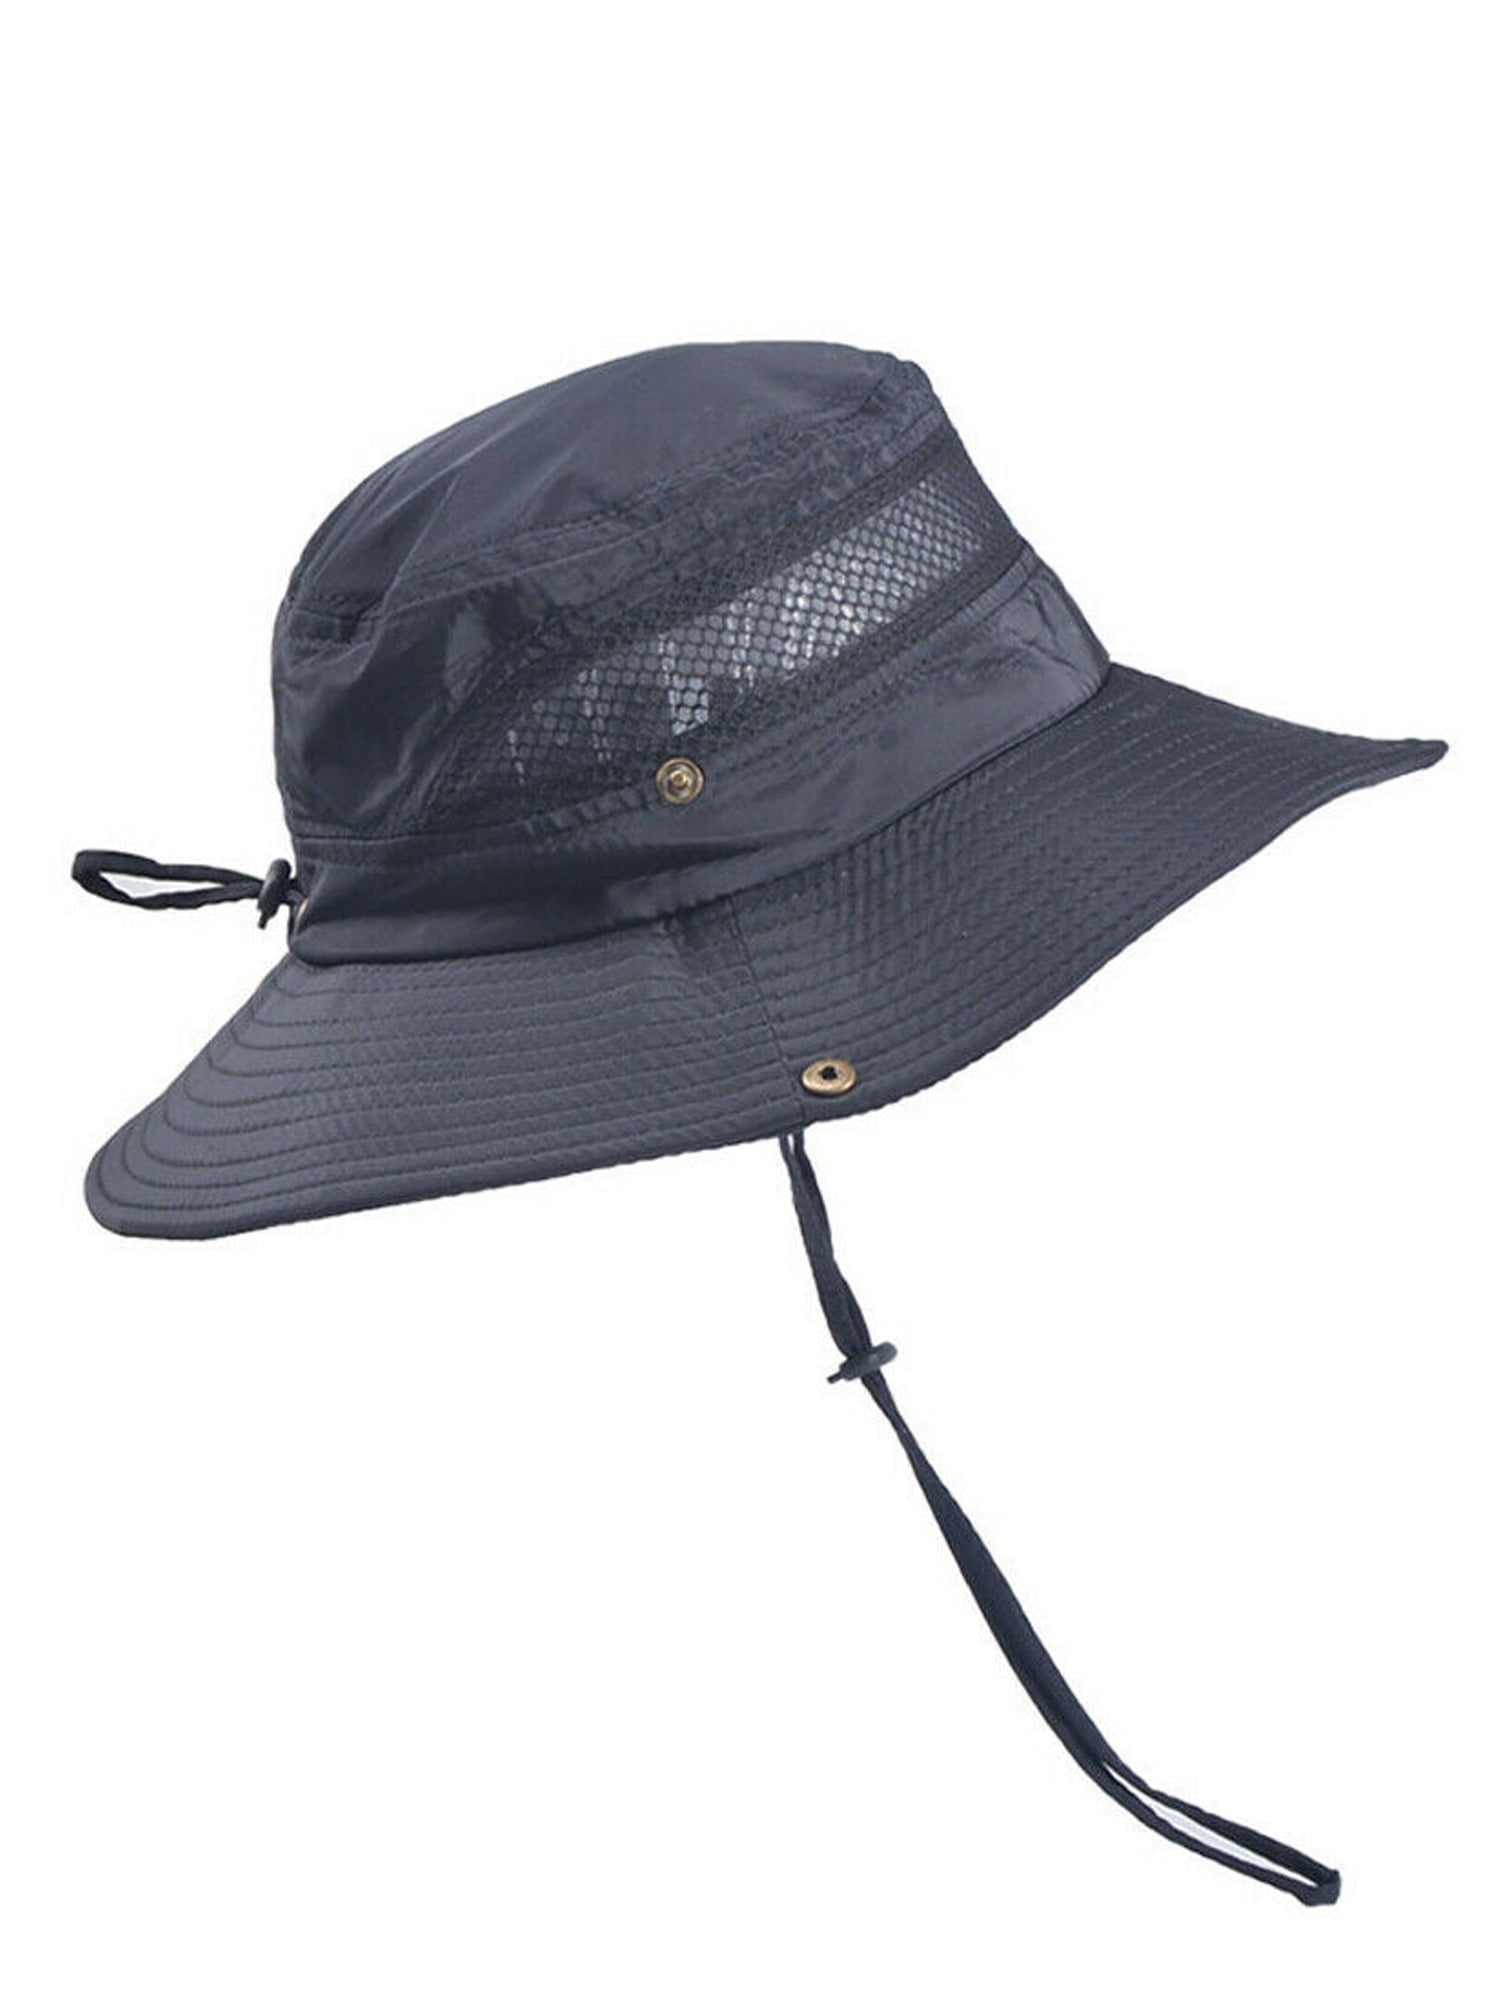 One opening - New Summer Mens Sun Hat Bucket Fishing Hiking Cap Wide ...